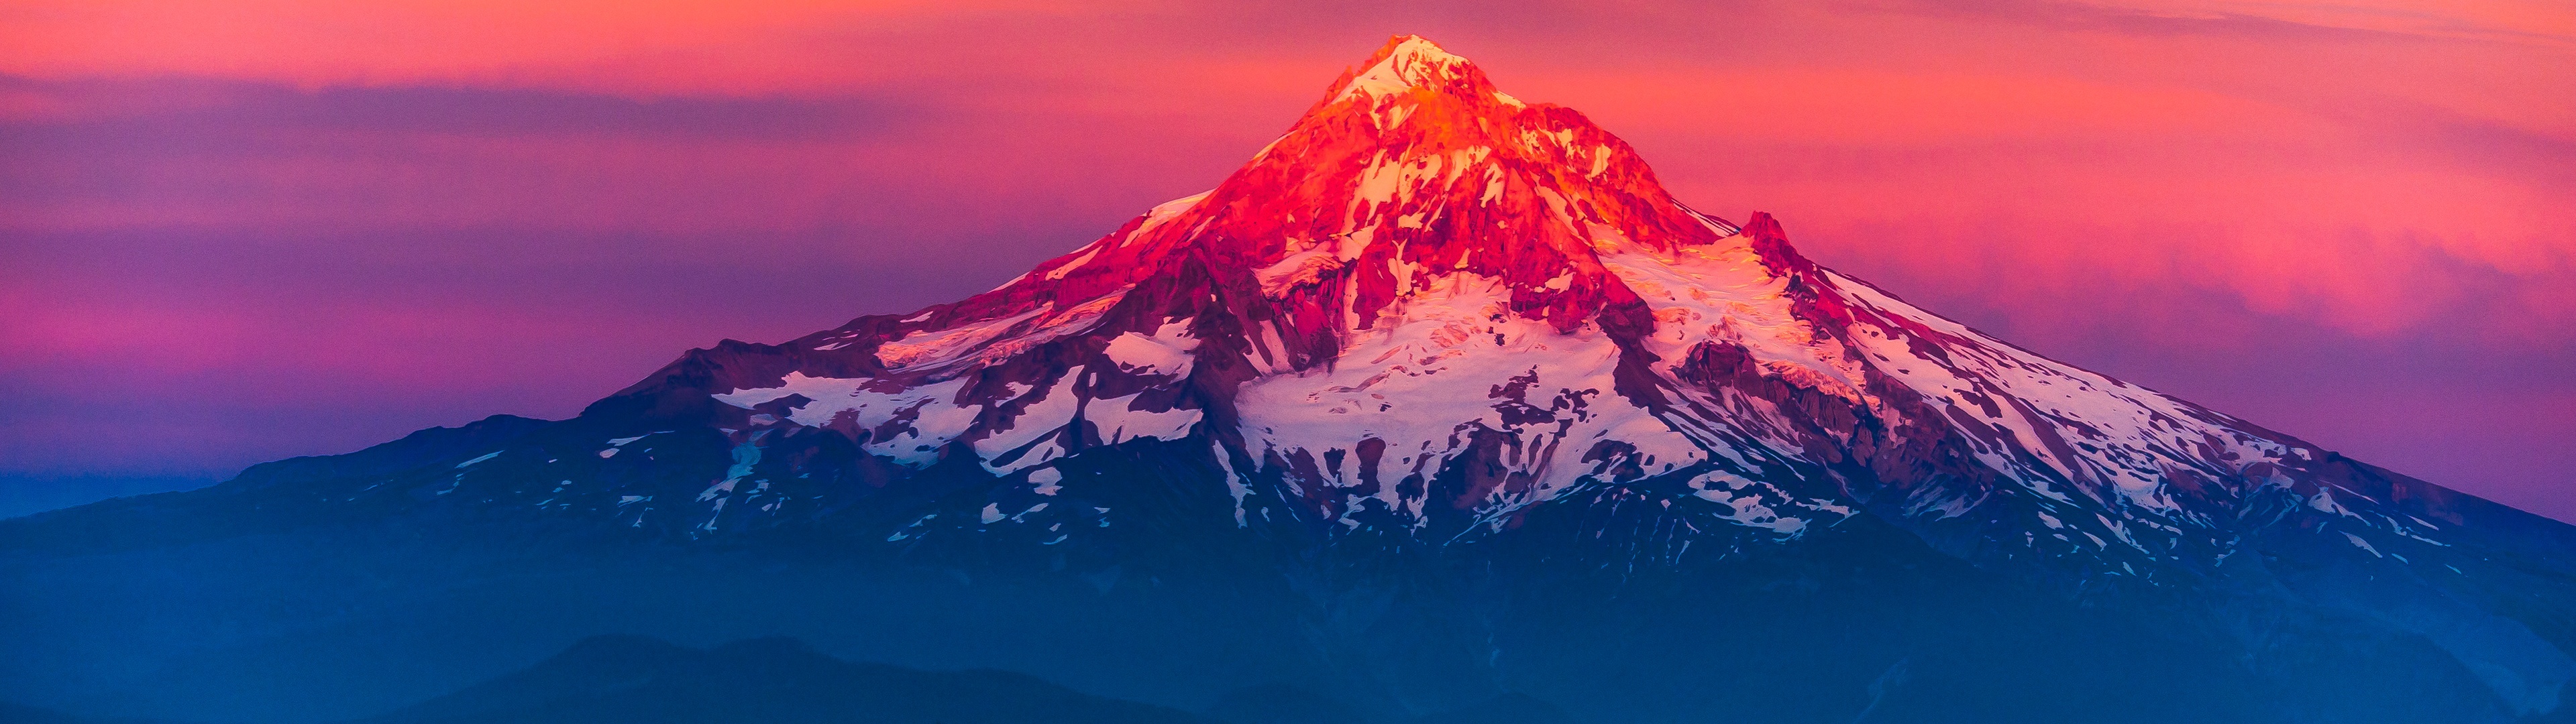 Mount Hood, Oregon, Travels, Mount Hood 4k wallpaper, Alpenglow sunset, 3840x1080 Dual Screen Desktop